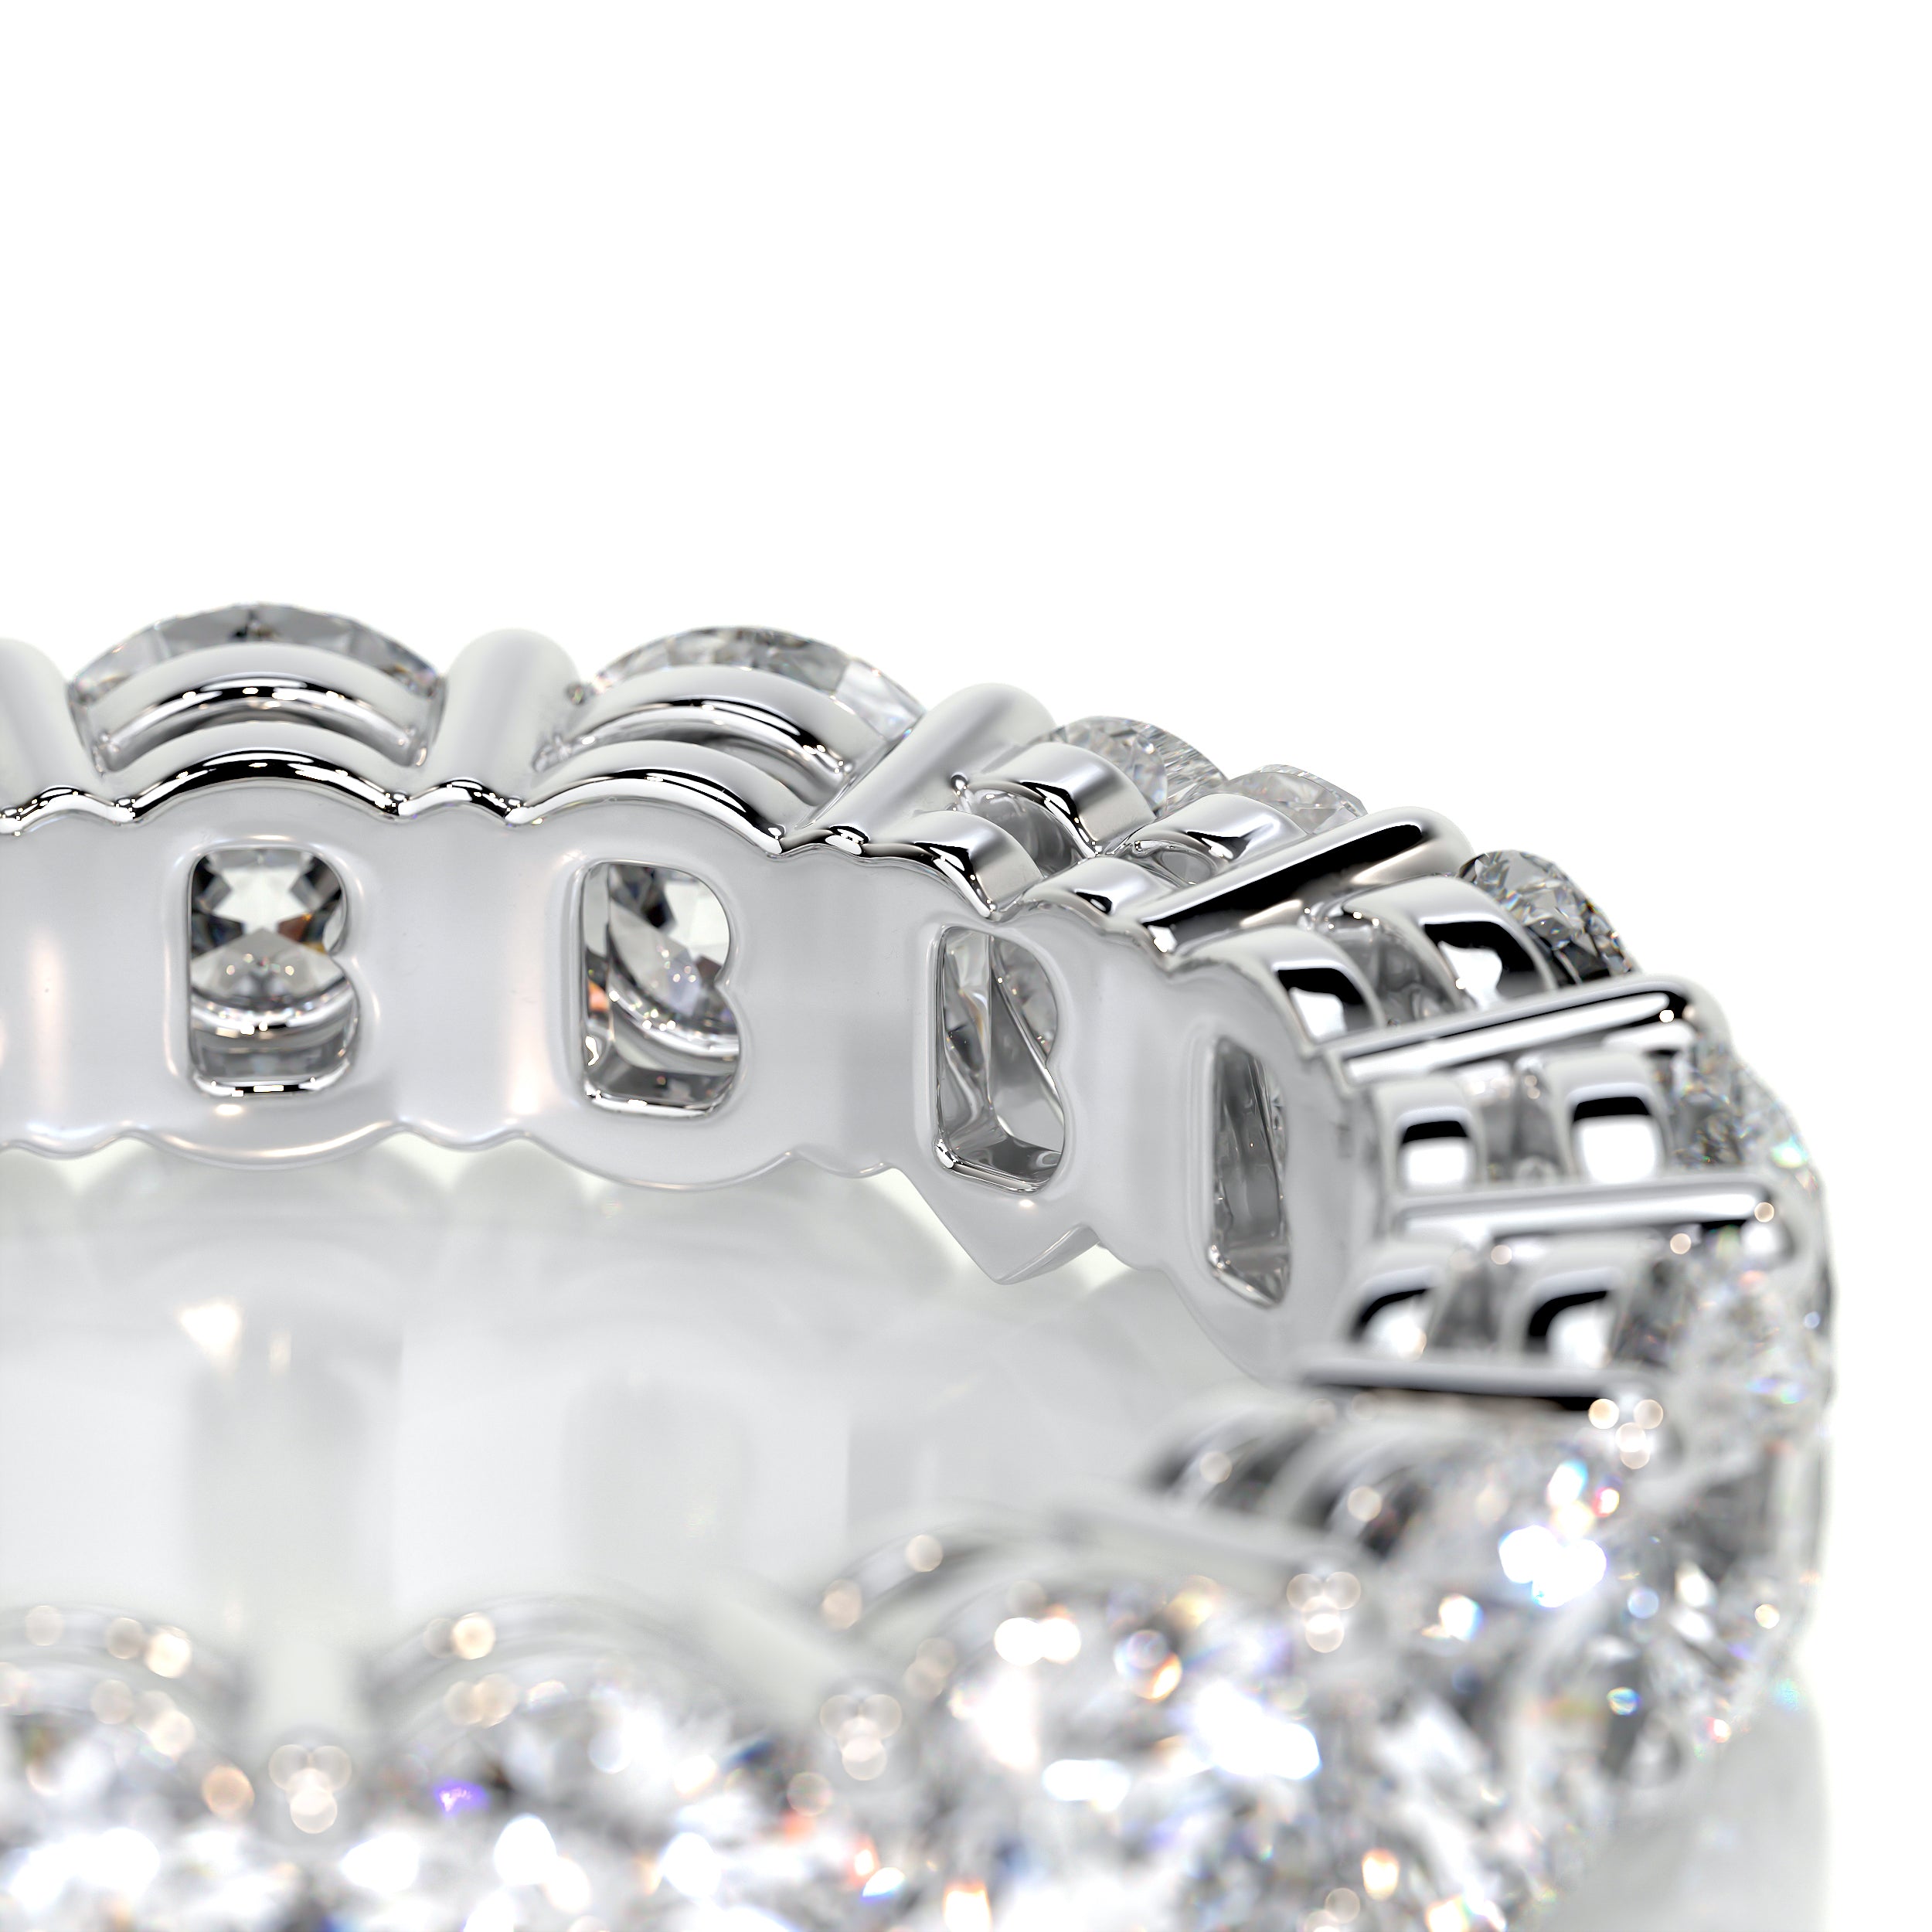 Anne Diamond Wedding Ring -18K White Gold